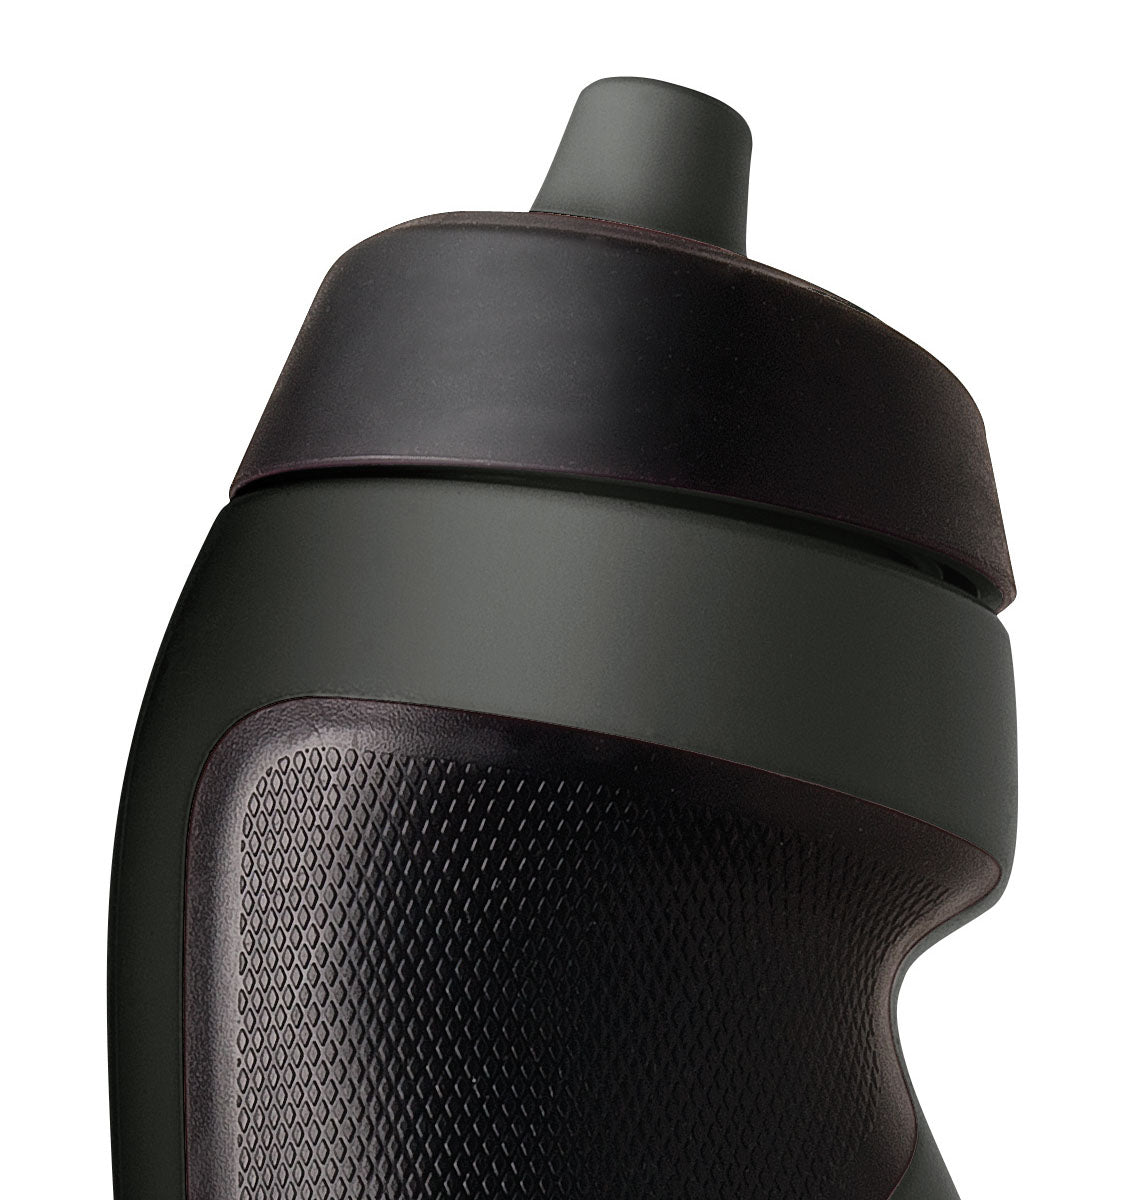 Nike Sport Water Bottle - 20oz/591mL - Anthracite/Black - 2